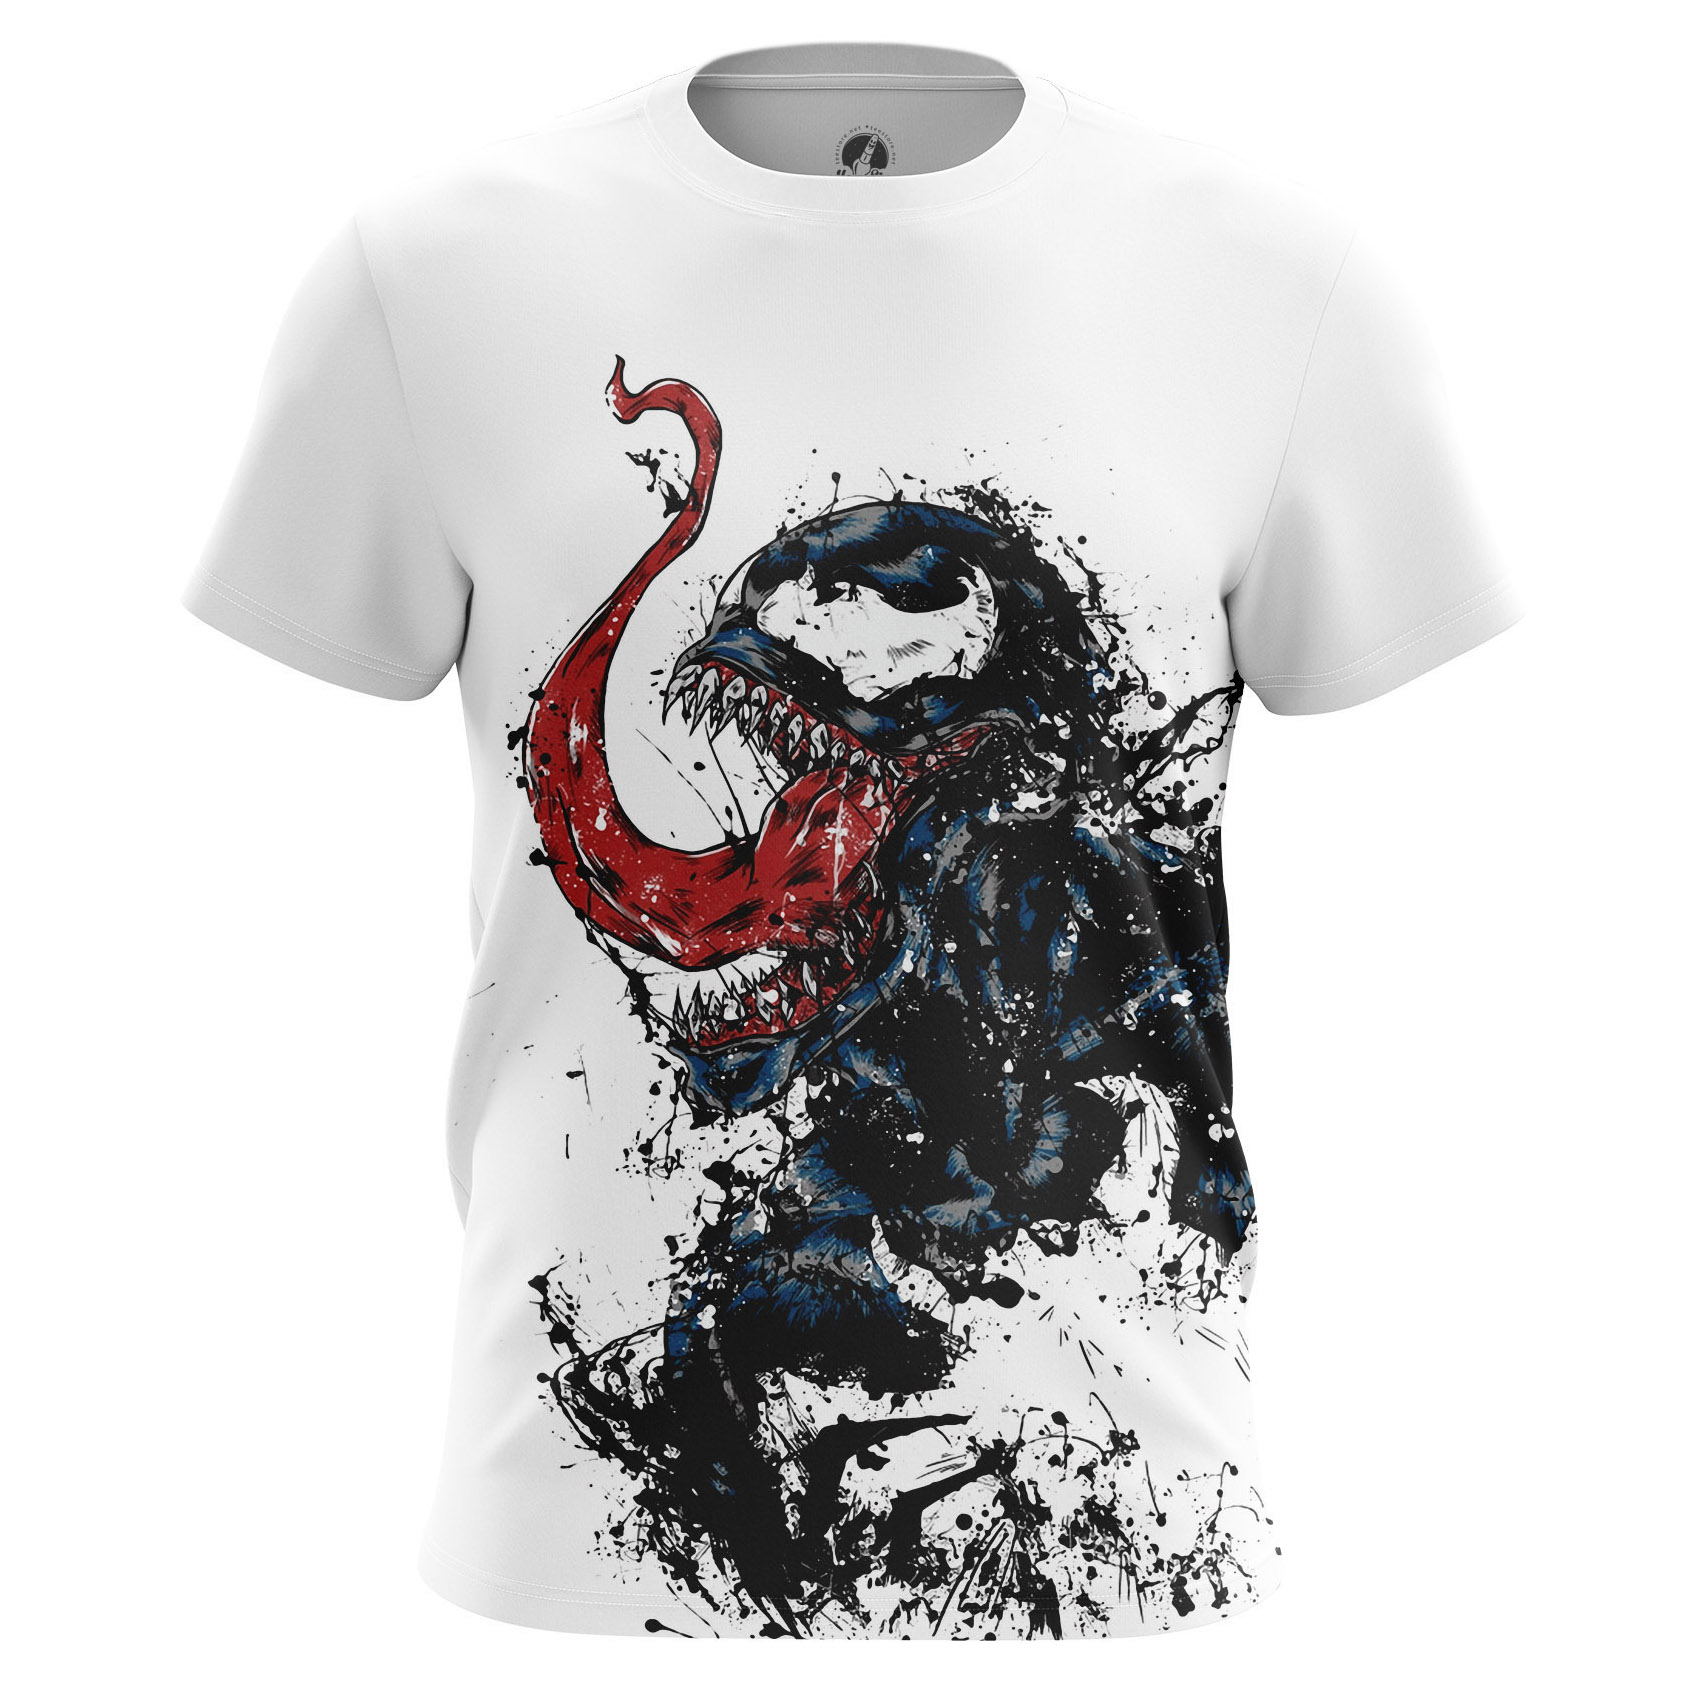 movies t-shirt badass merch design, Movies with the most badass t-shirt merch designs